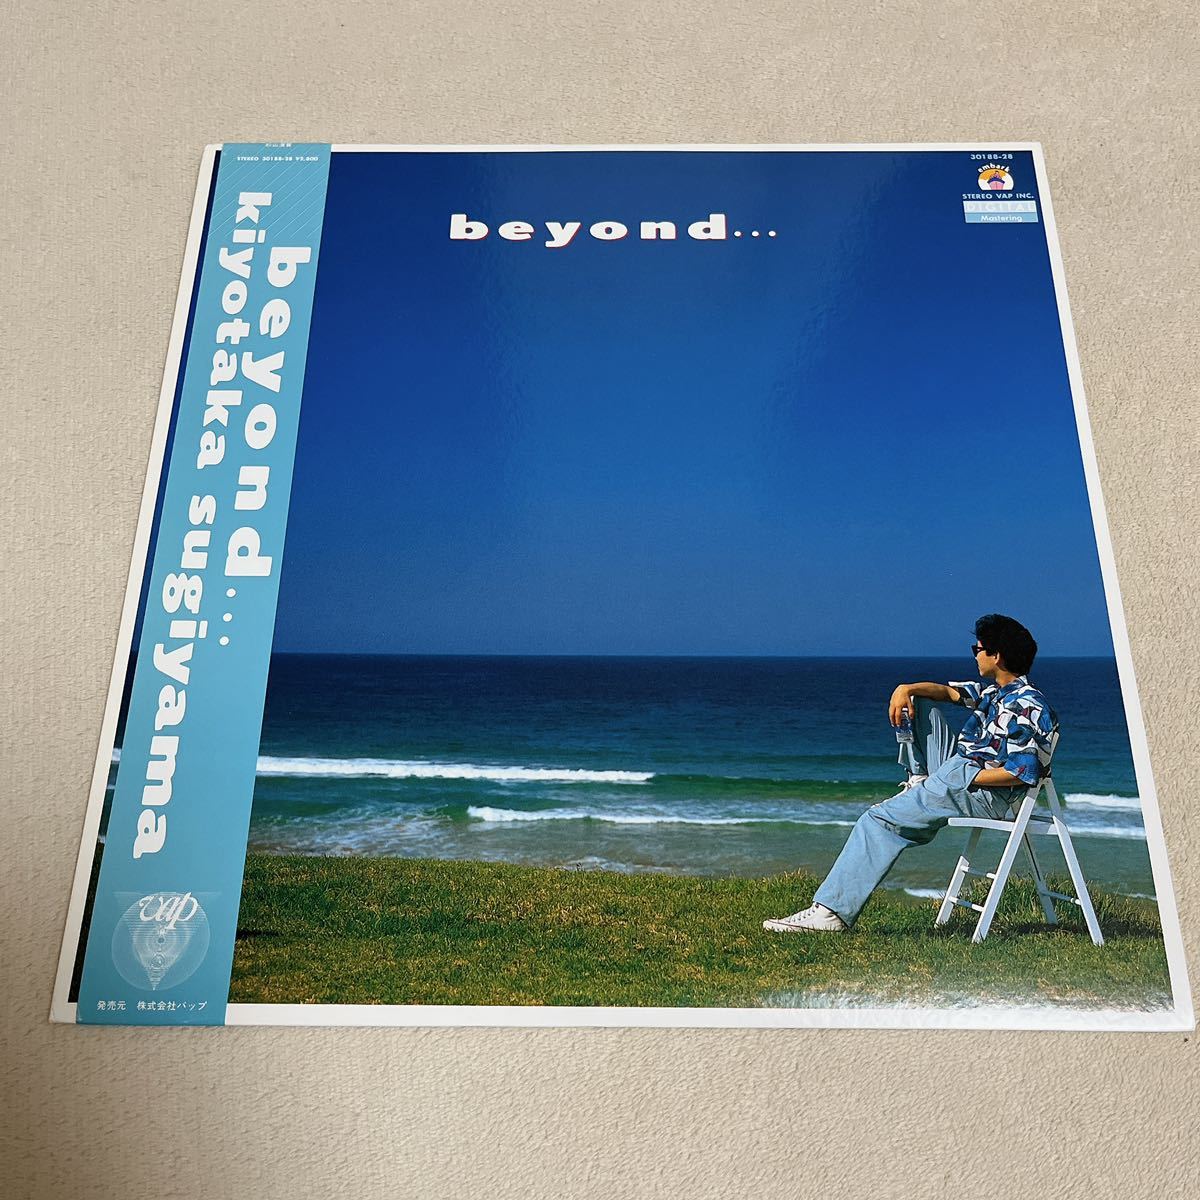 [ with belt ] Sugiyama Kiyotaka beyond... ALONE.. if. Ocean KIYOTAKA SUGIYAMA / LP record / 30188-28 / liner have / peace mono /